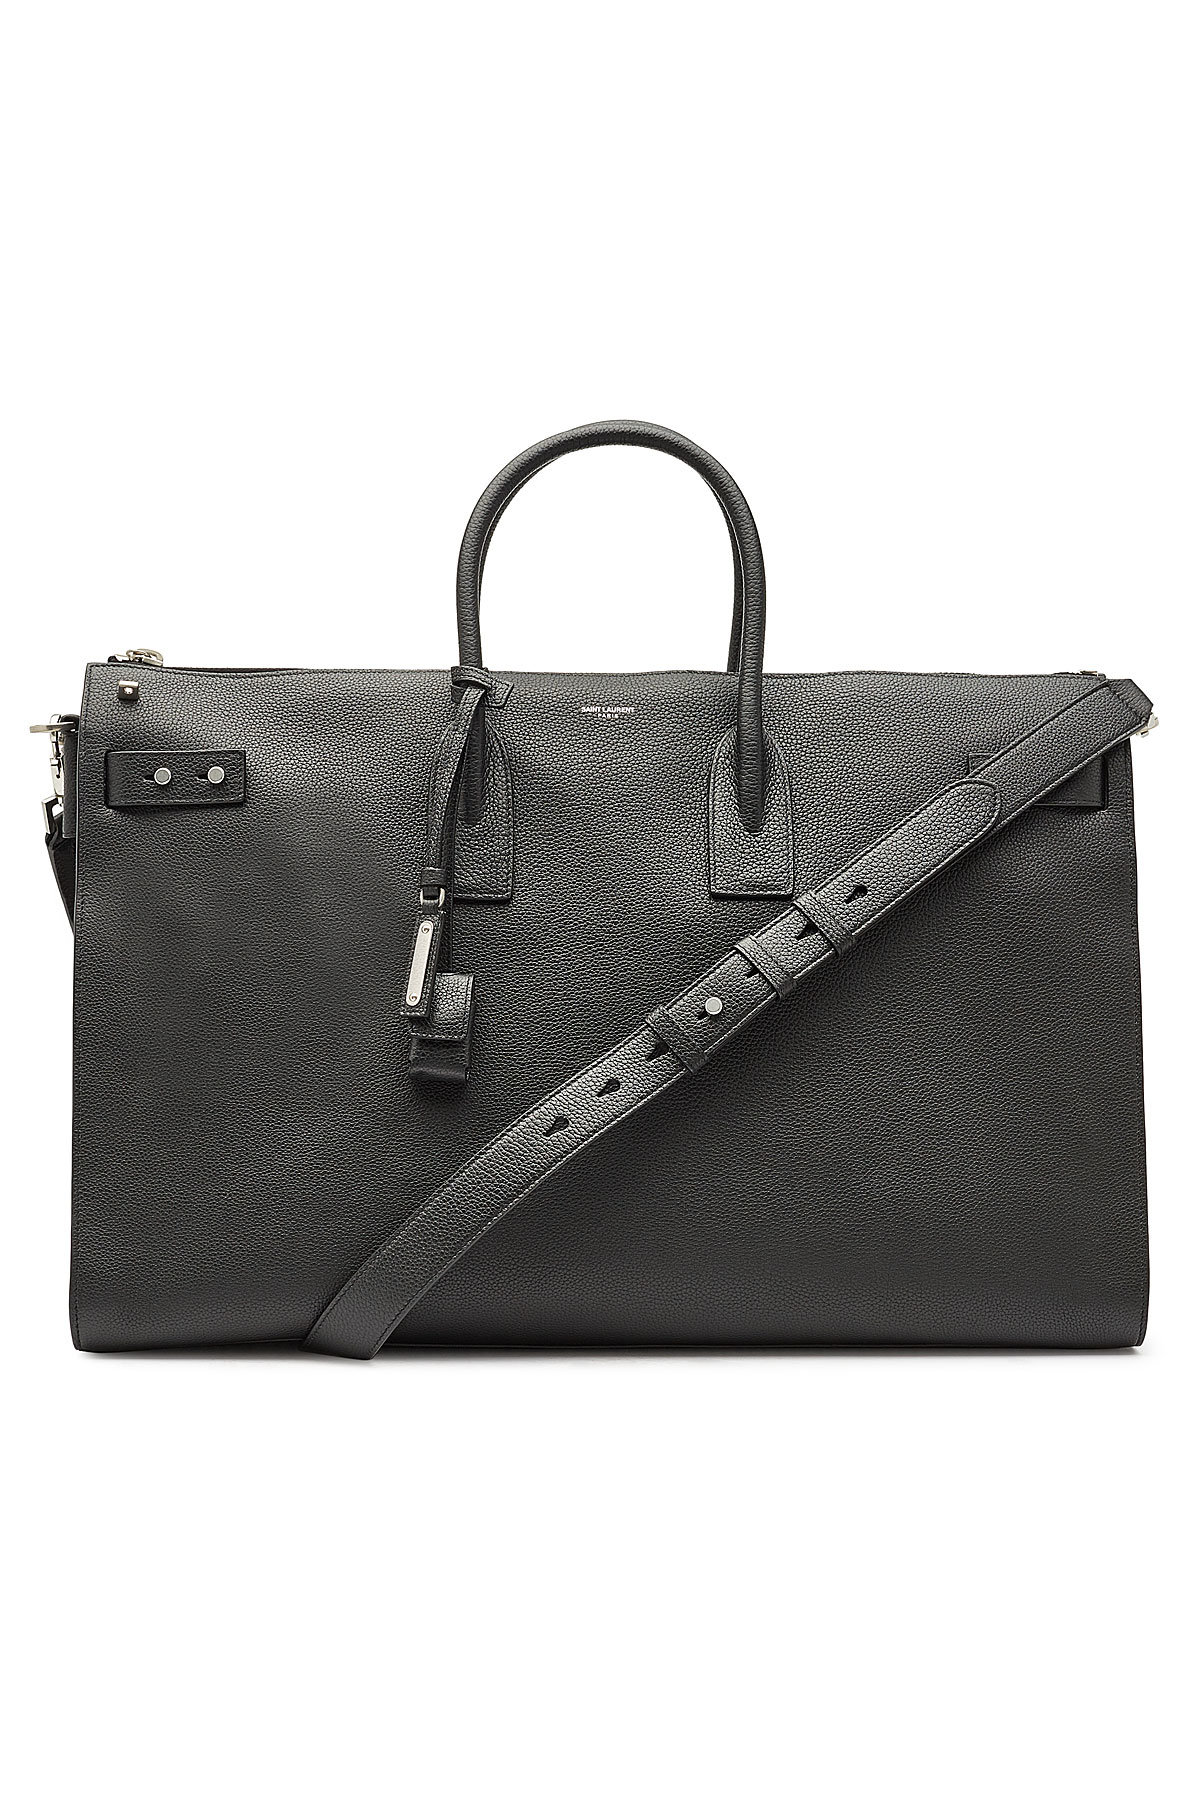 Saint Laurent Leather Briefcase | The Fashionisto